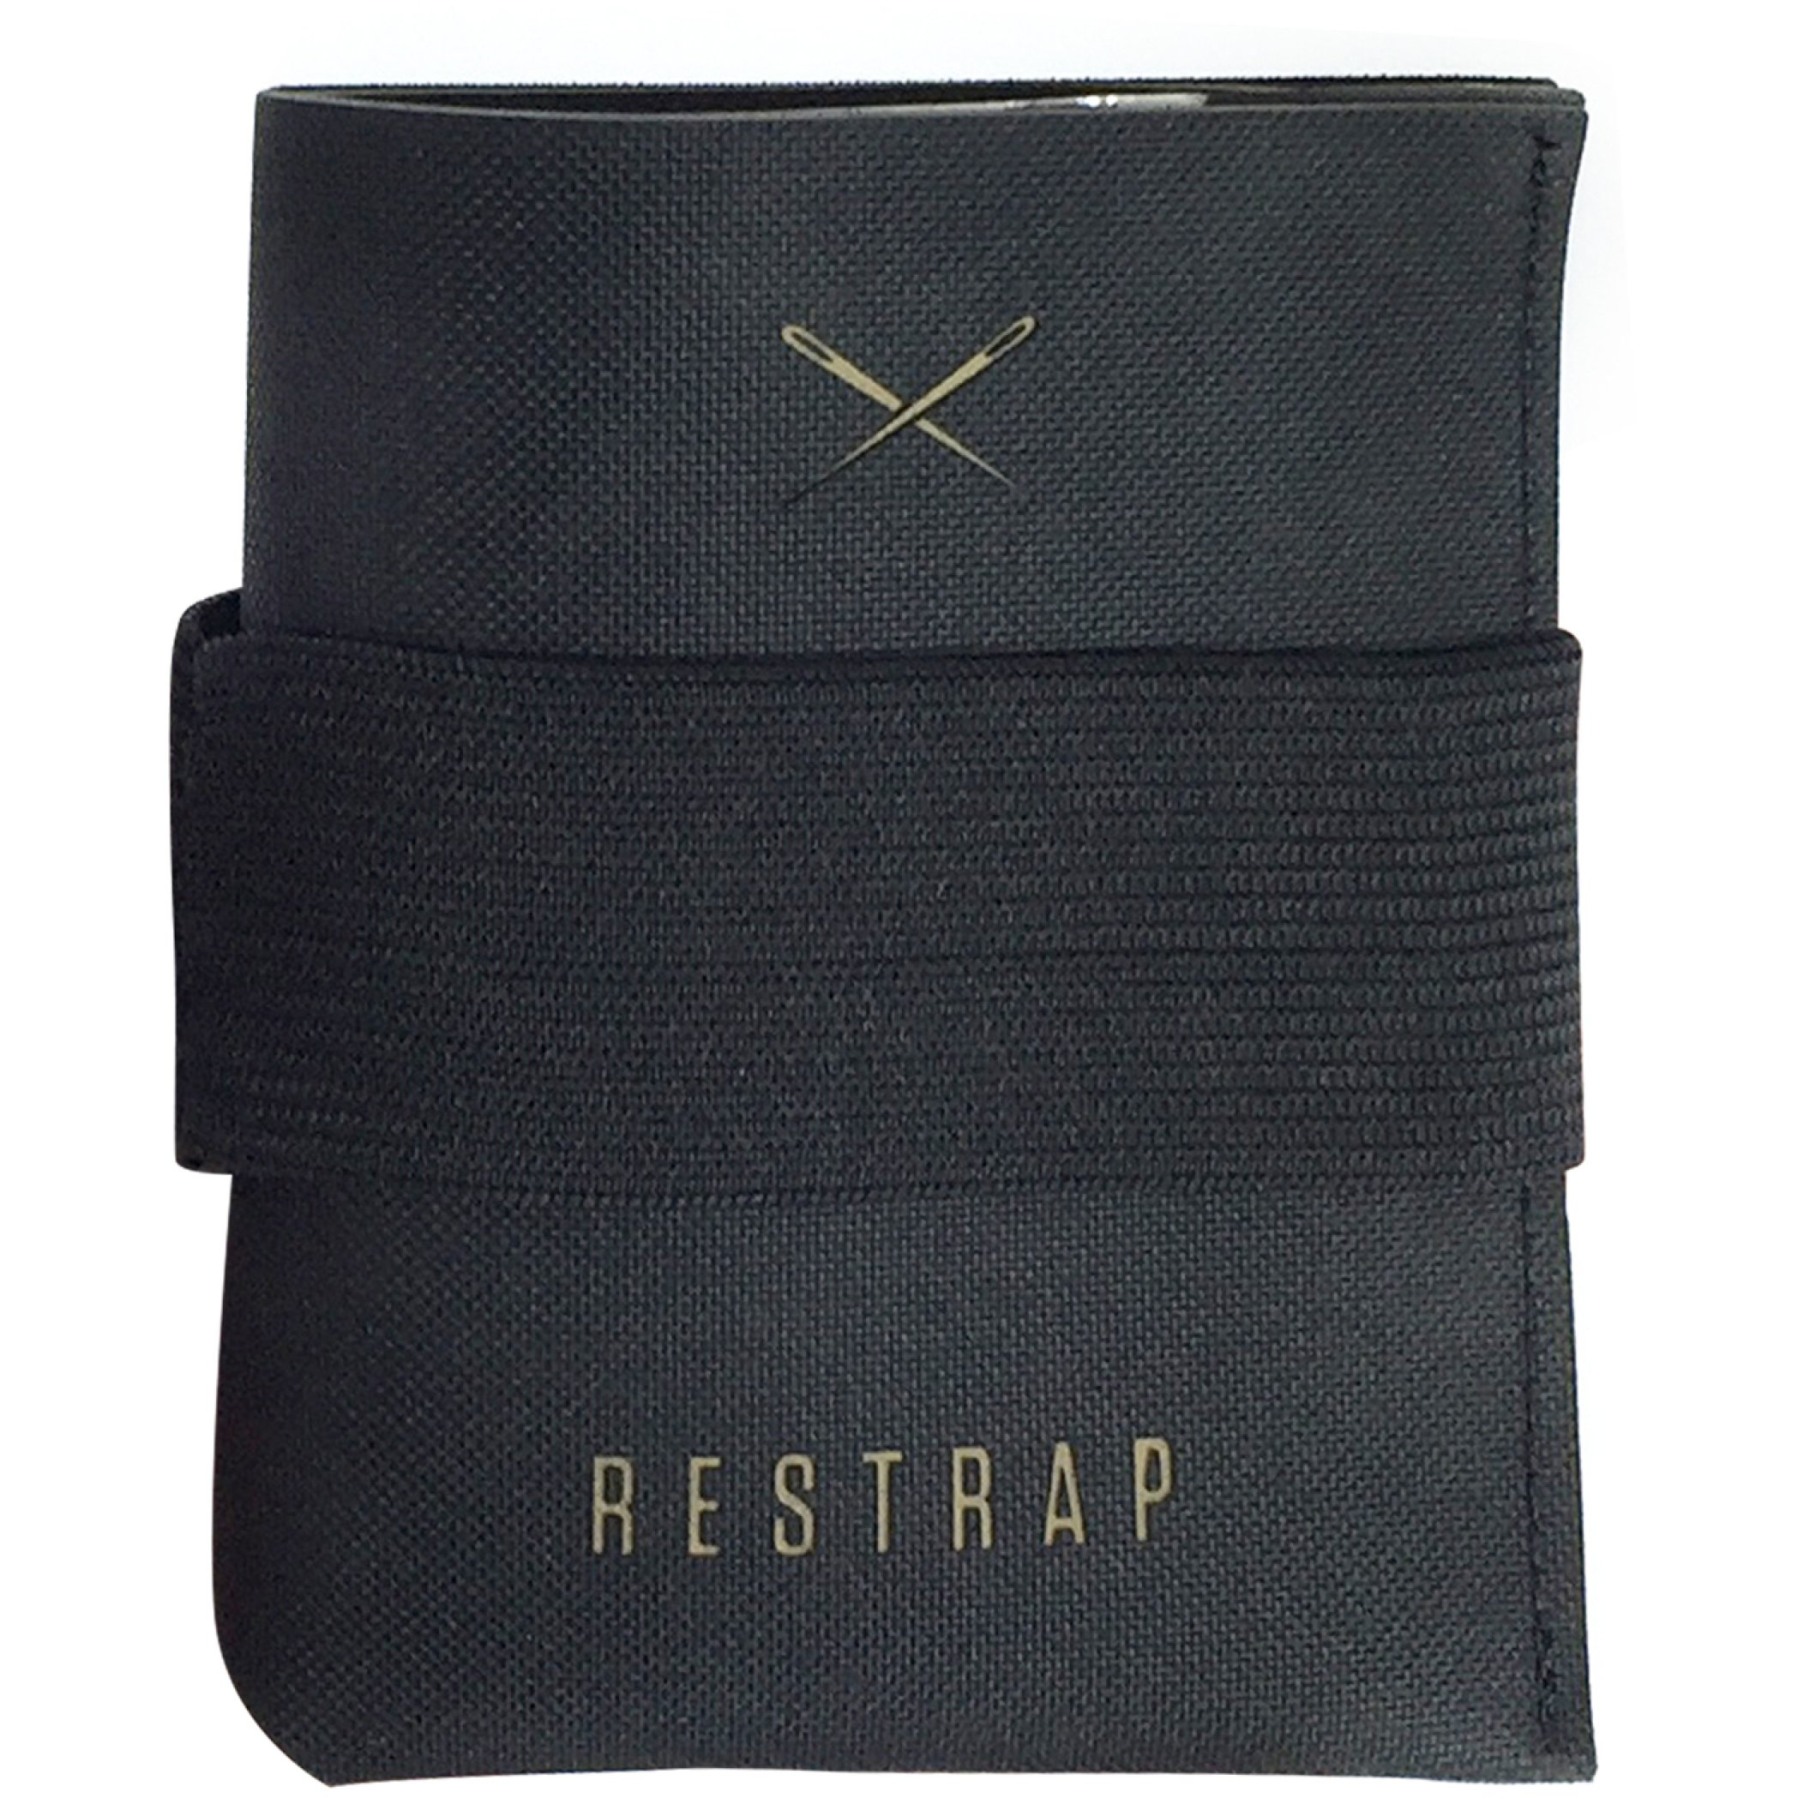 Picture of Restrap Wallet - black